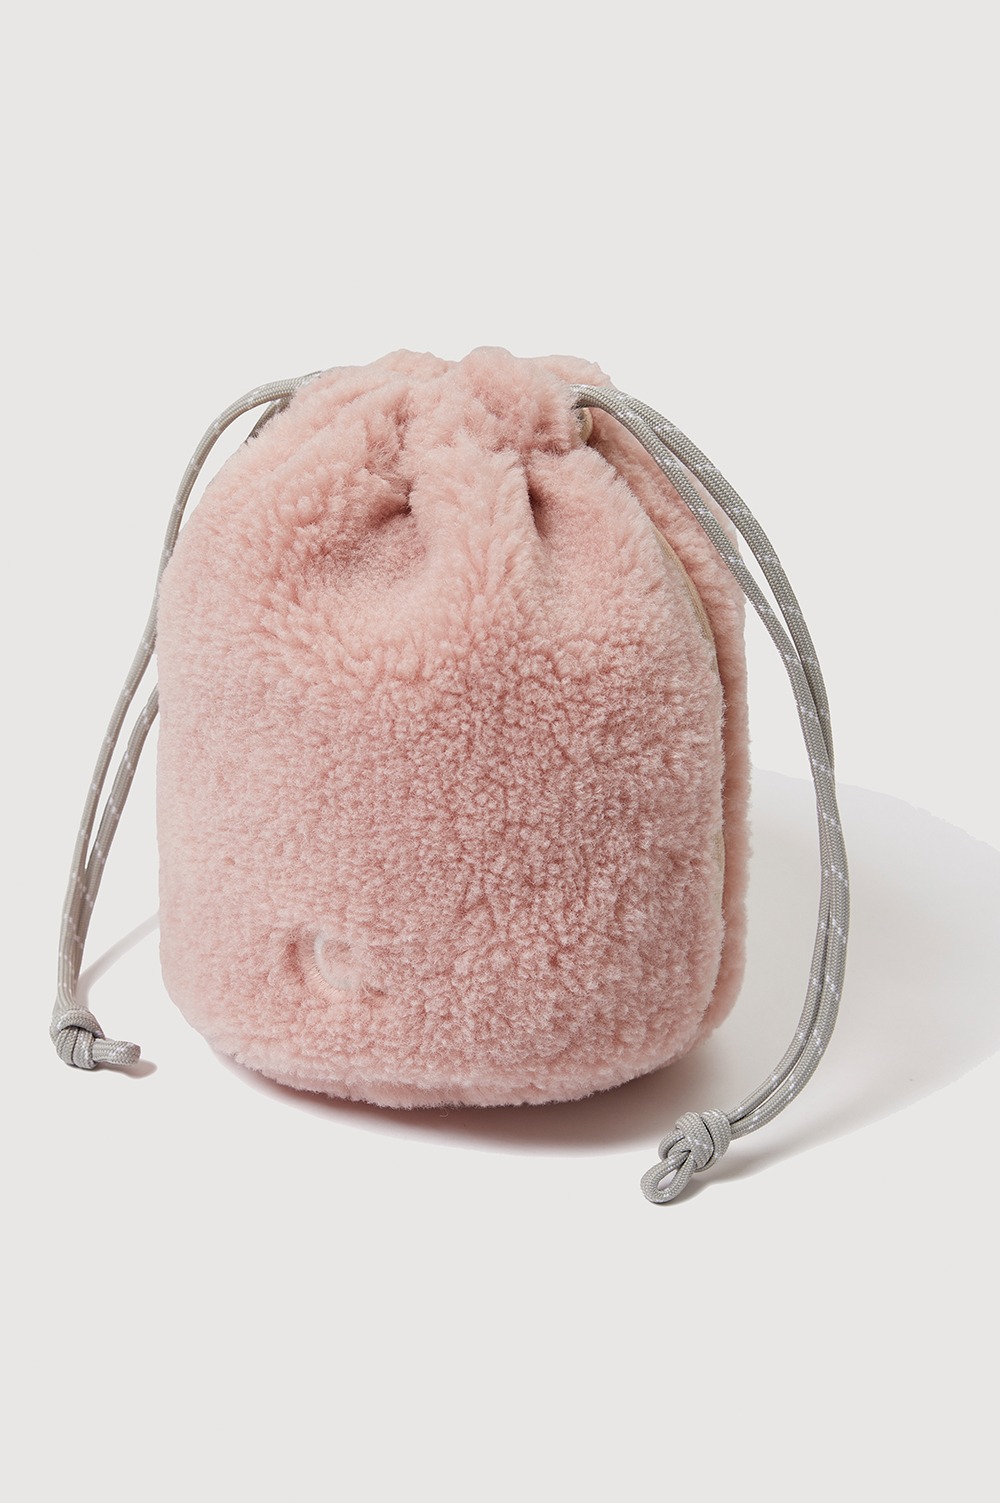 clove - [22FW clove] Teddy Bear Bag (Pink)